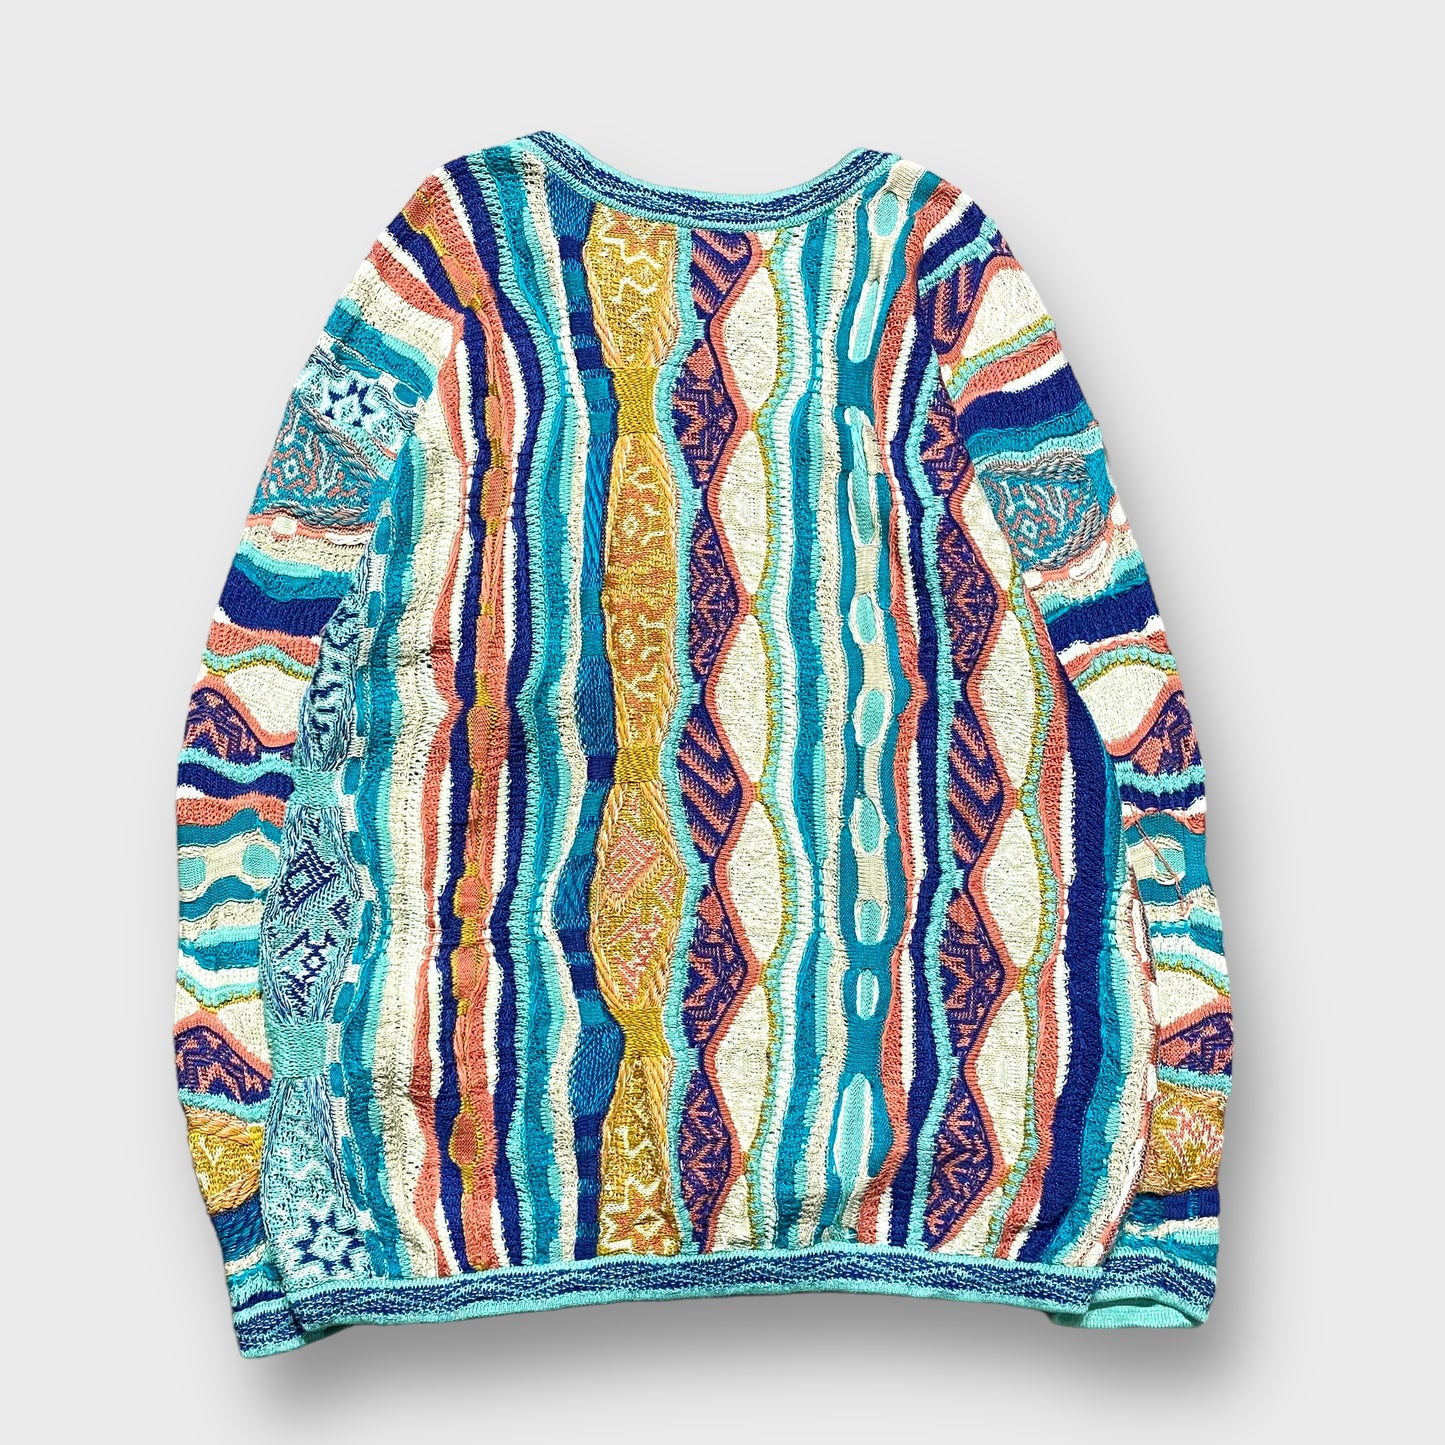 90's "COOGI" 3D knit sweater